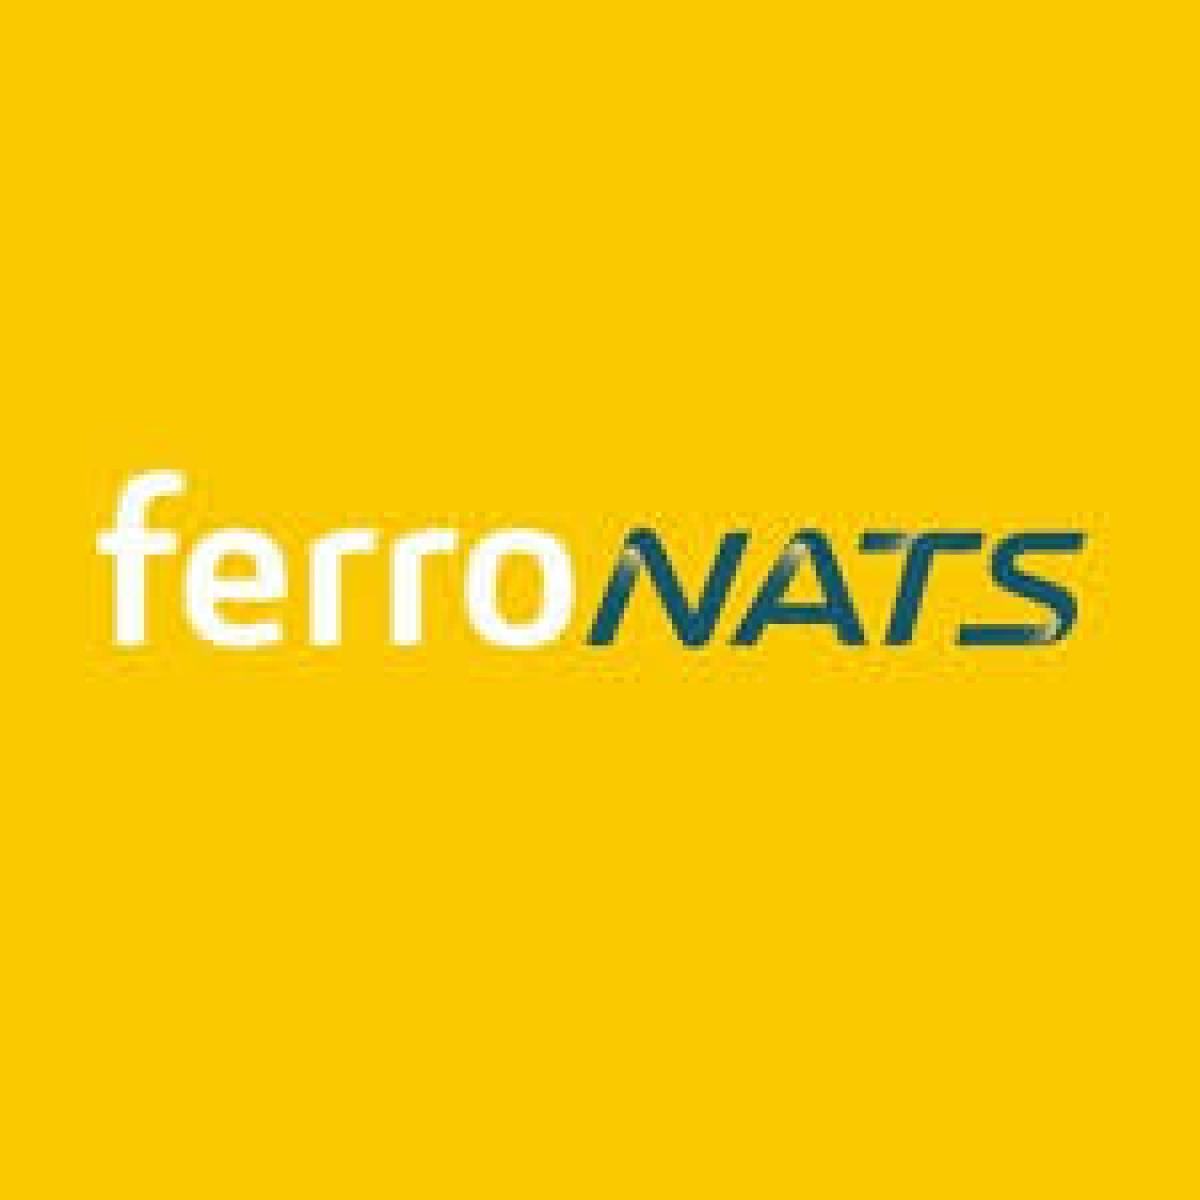 Logo FerroNats.